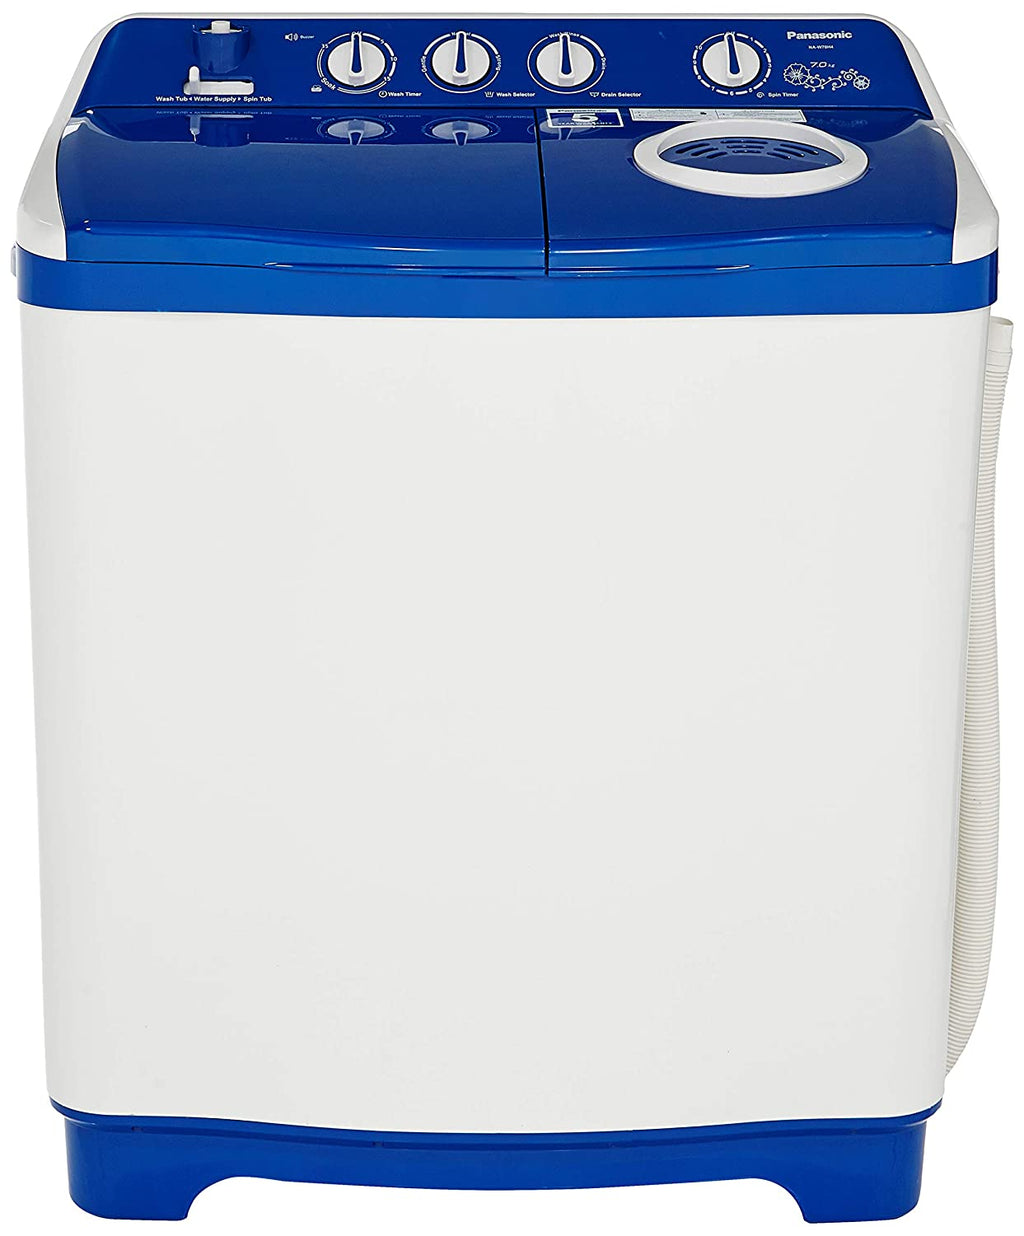 Panasonic Na-w72h2arb Semi-automatic Washing Machine 7.2 Kg, Blue